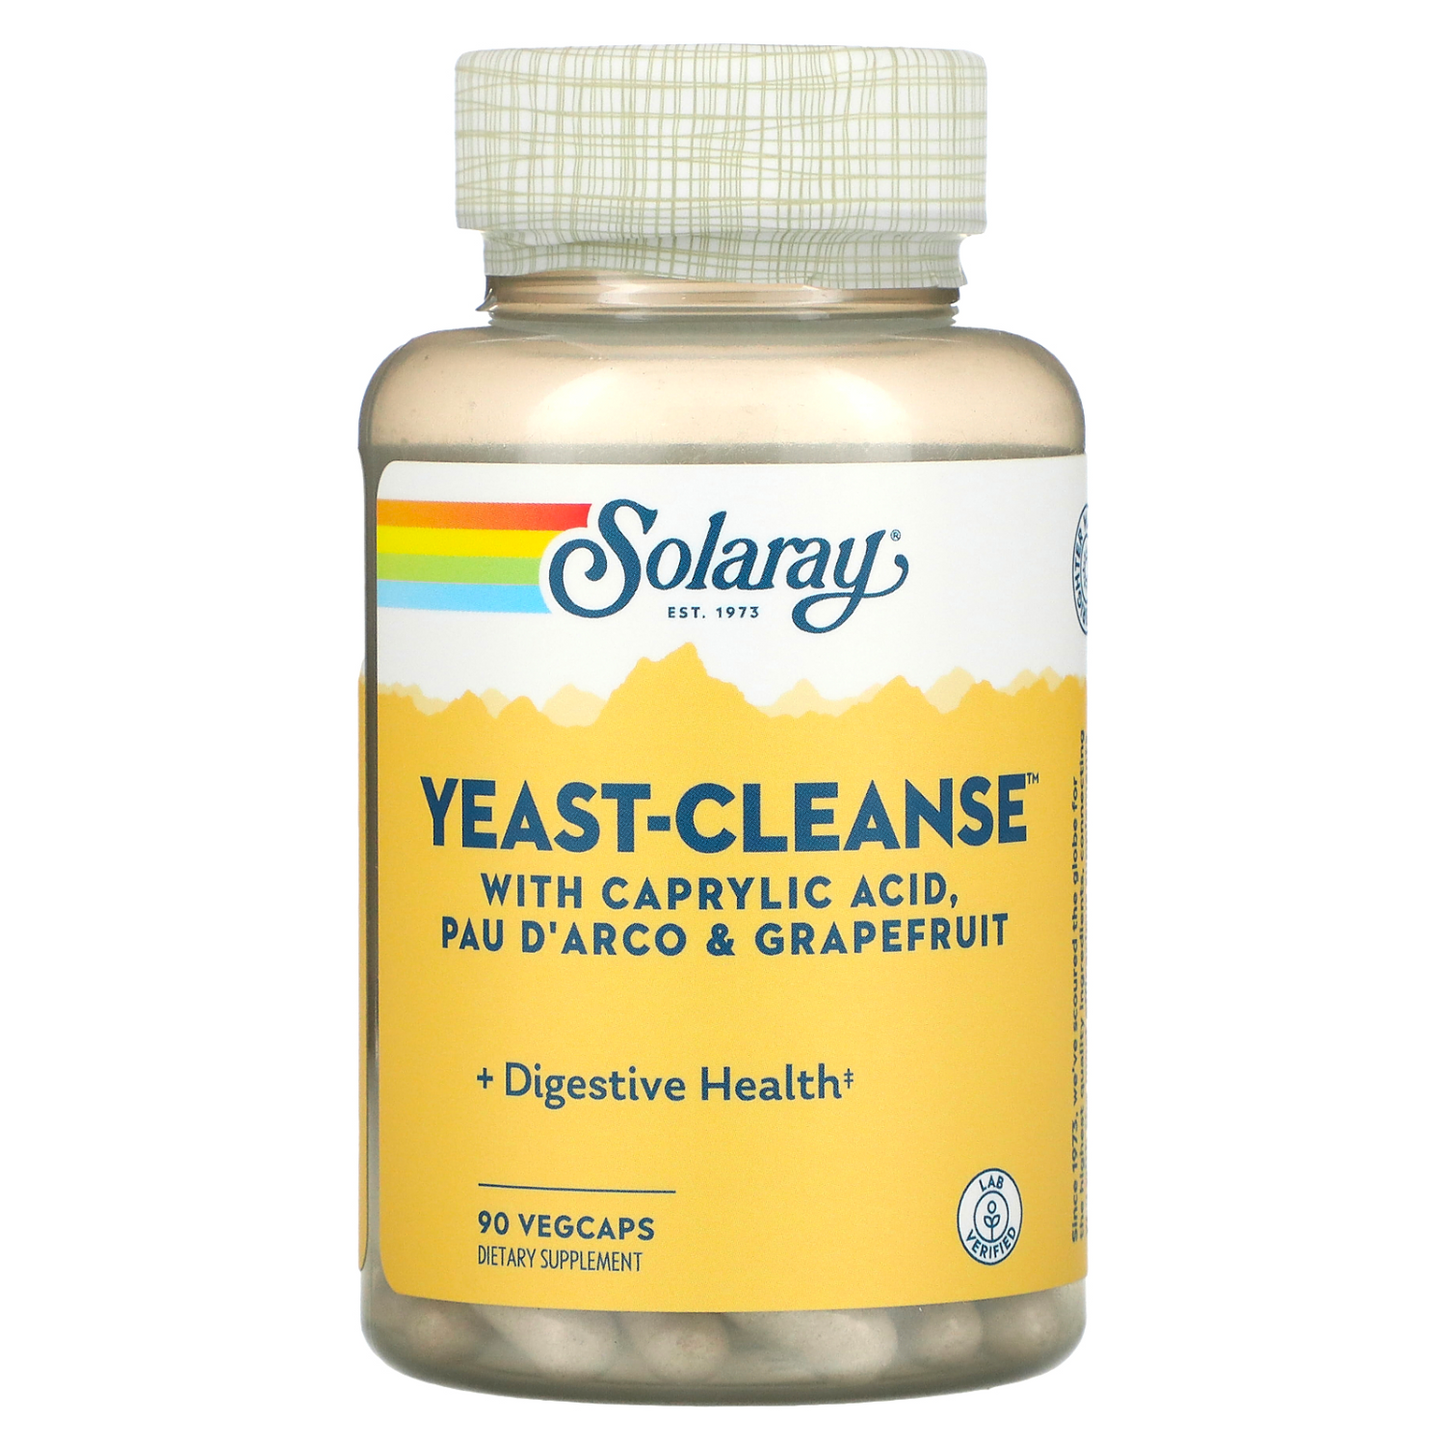 SOLARAY - Yeast-Cleanse - 90 Veg Caps